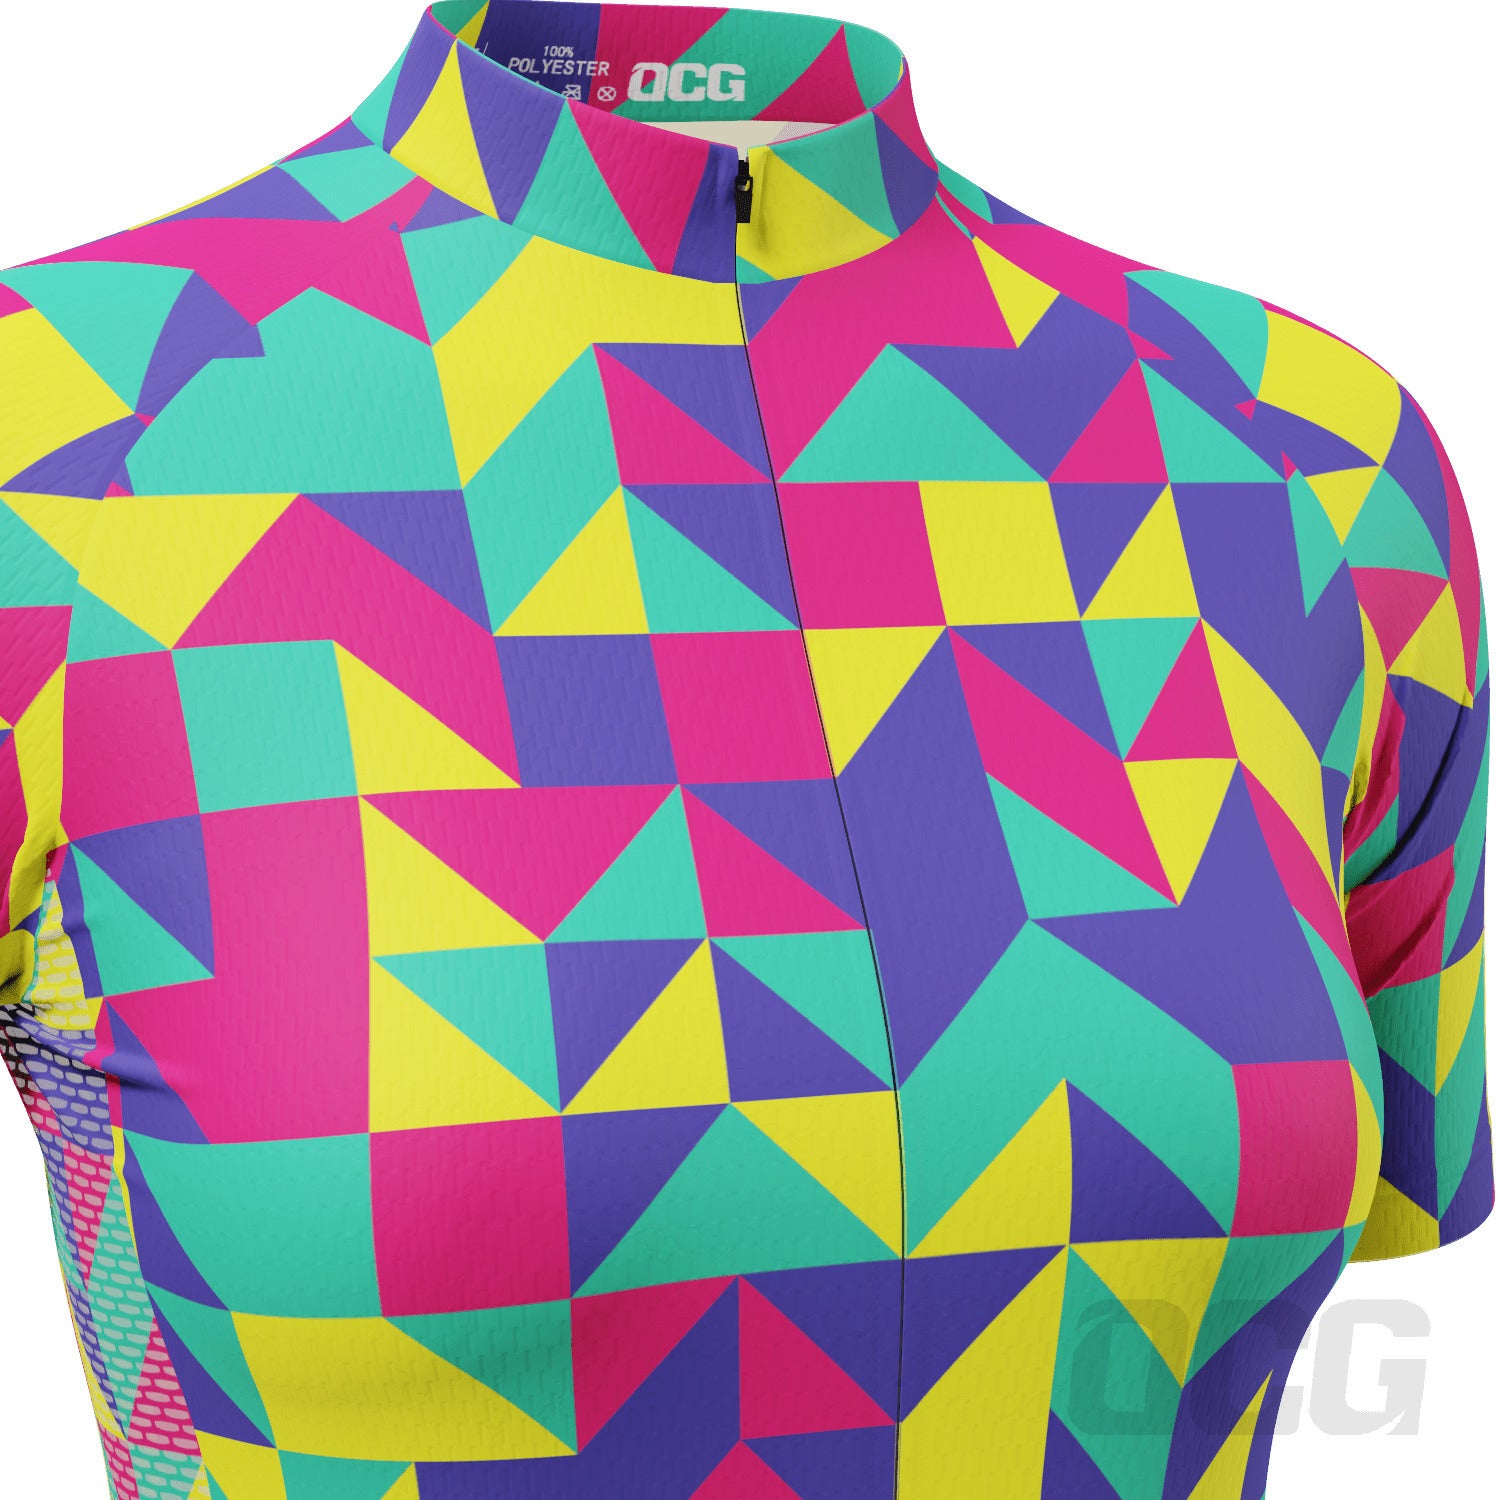 Women's High Viz Neon Geometry Short Sleeve Cycling Jersey